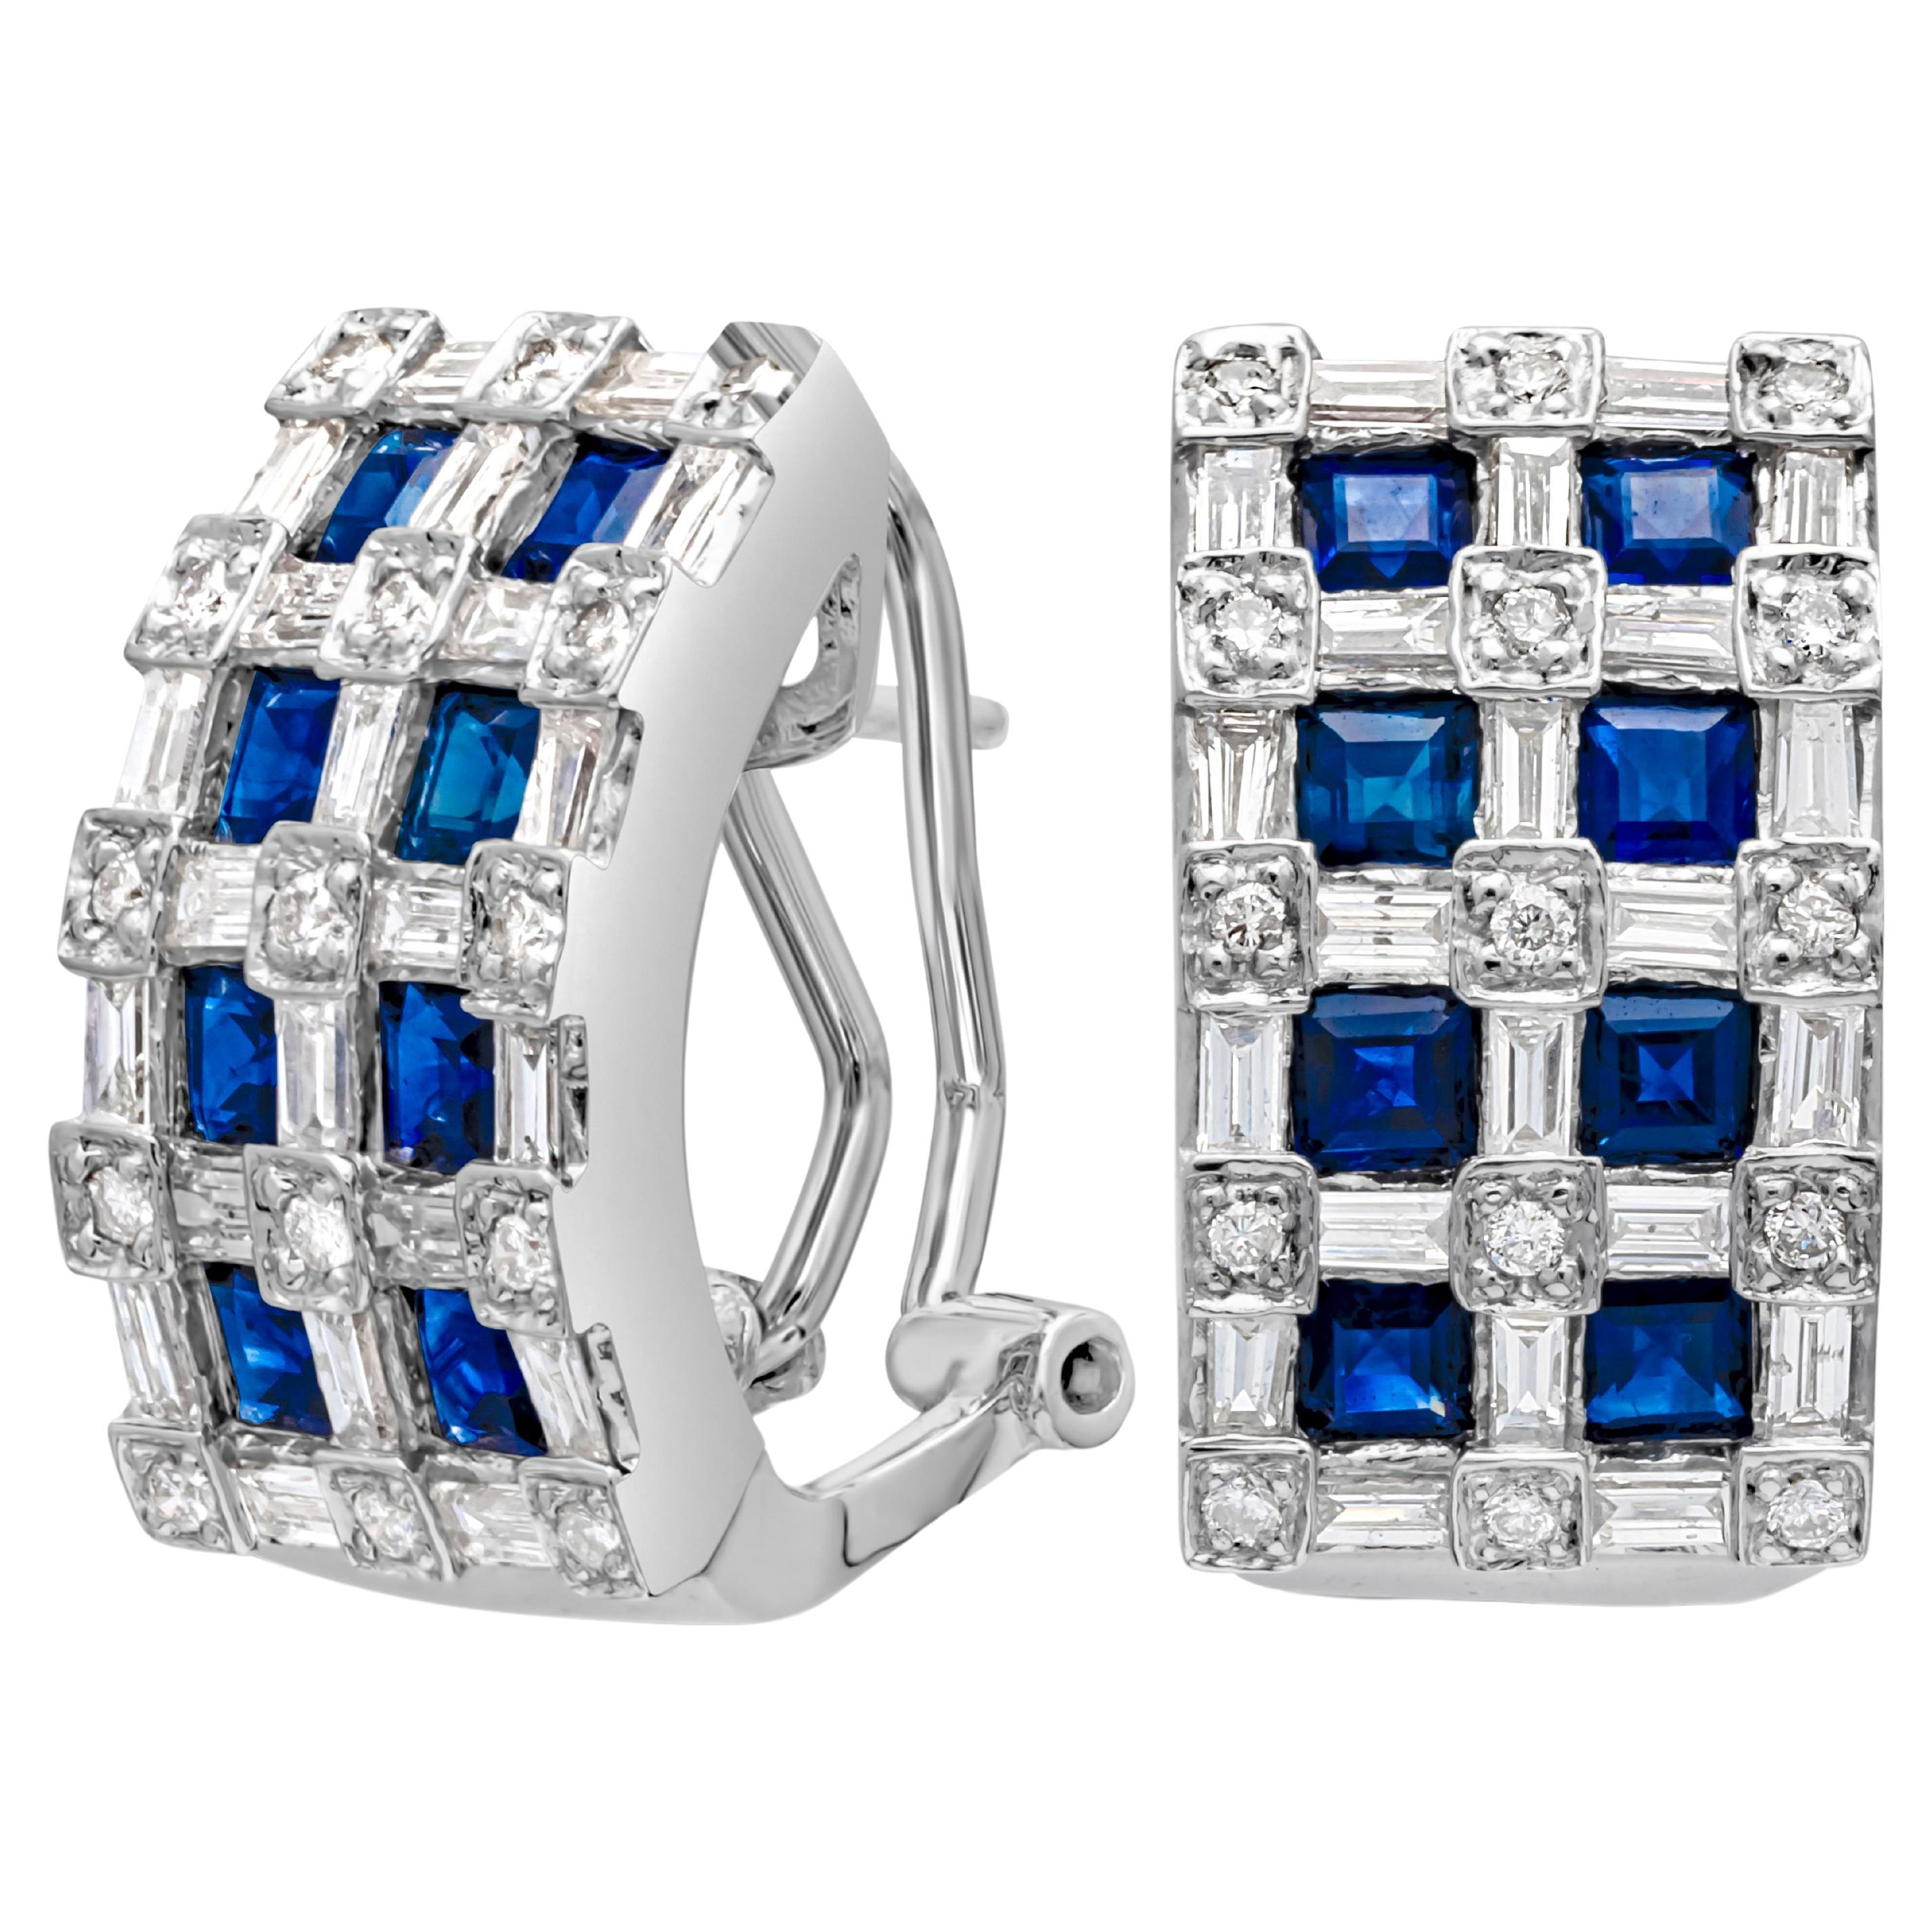 2.40 Carats Total Asscher Cut Blue Sapphire with Mixed Cut Diamond Hoop Earrings For Sale